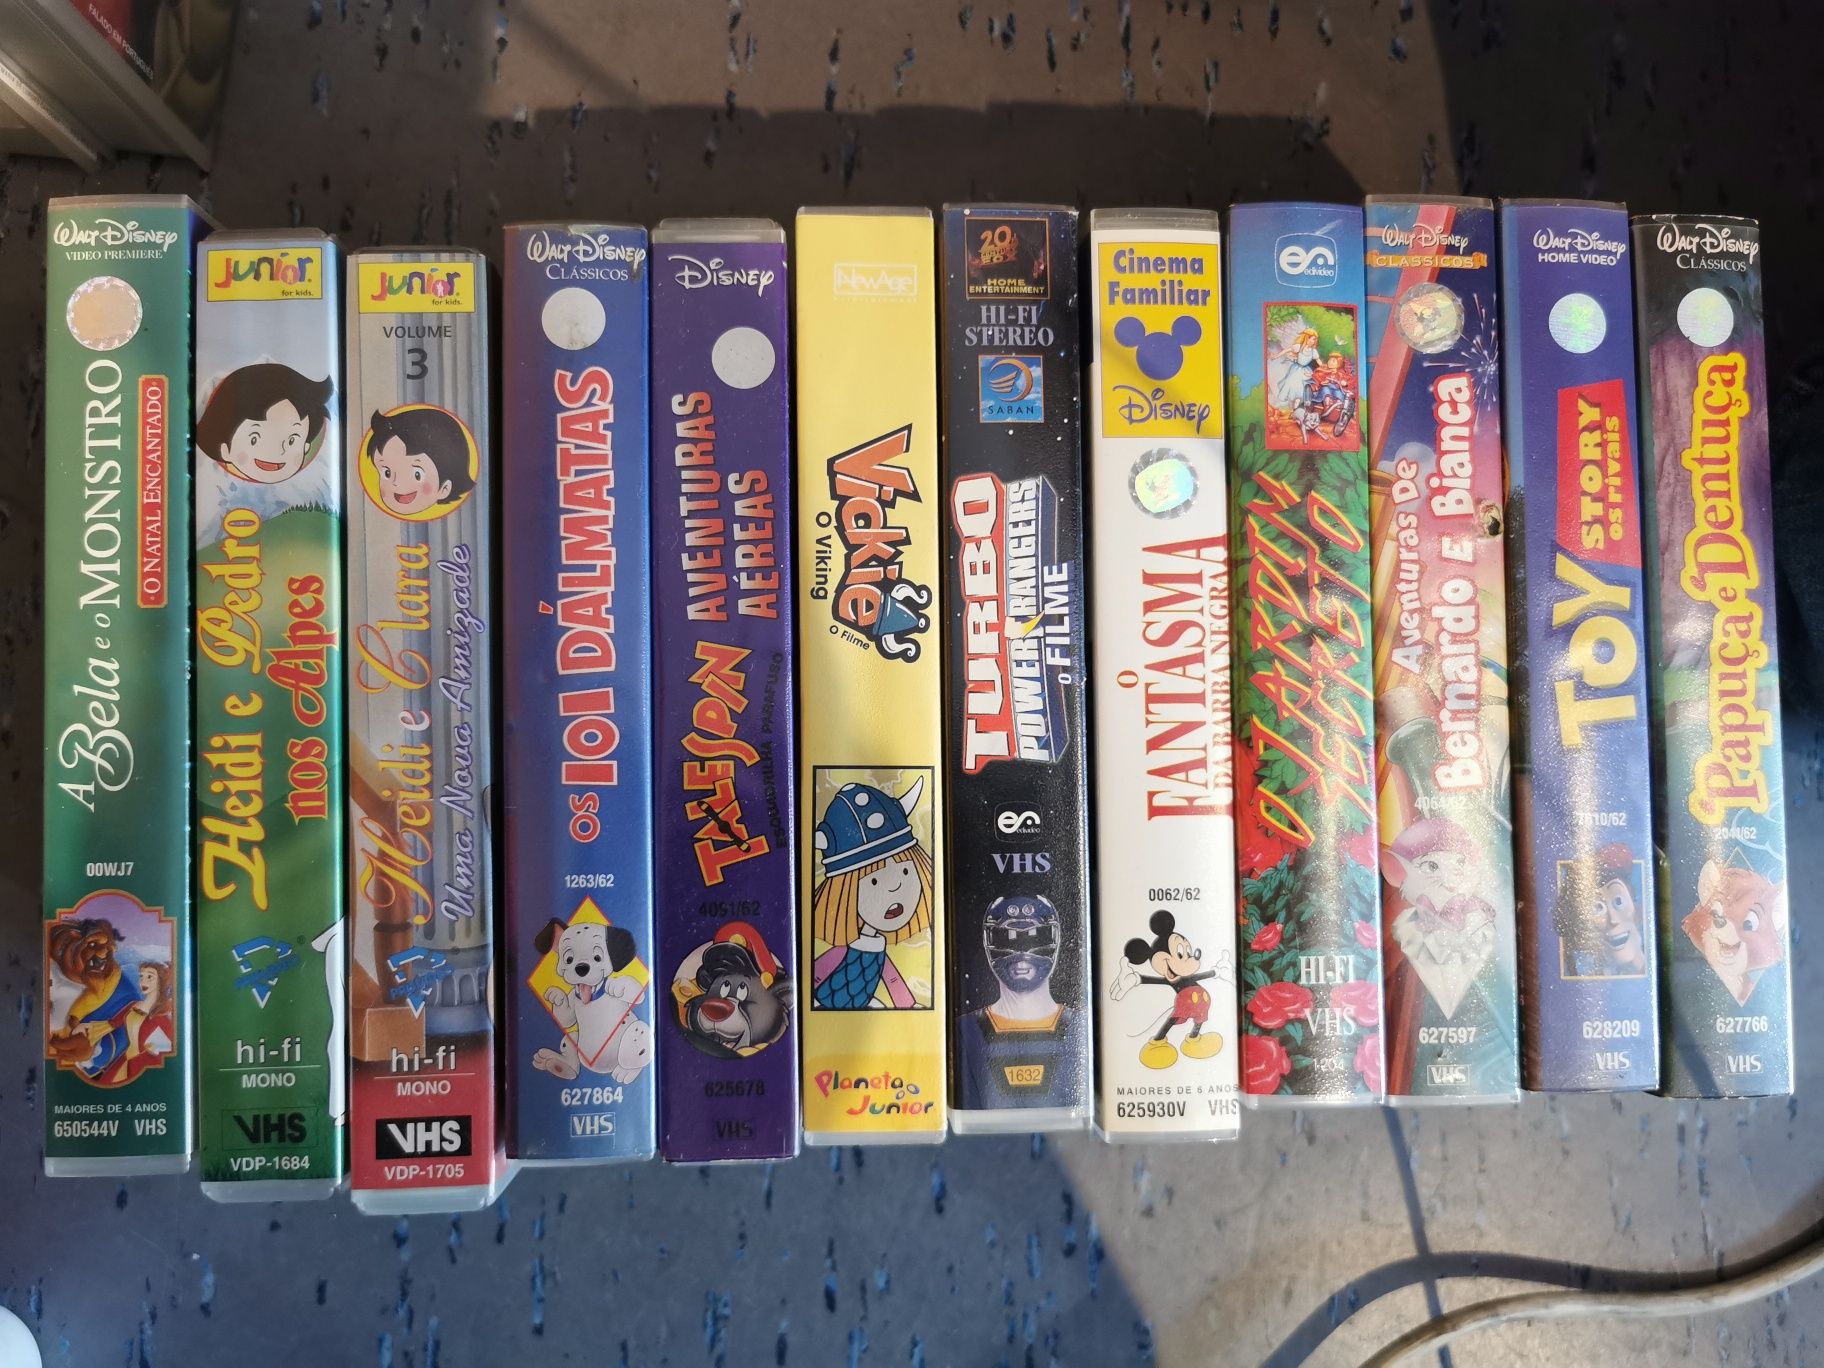 Cassetes VHS Disney, Tom & Jerry, Loonney tunes, Pokemon, etc